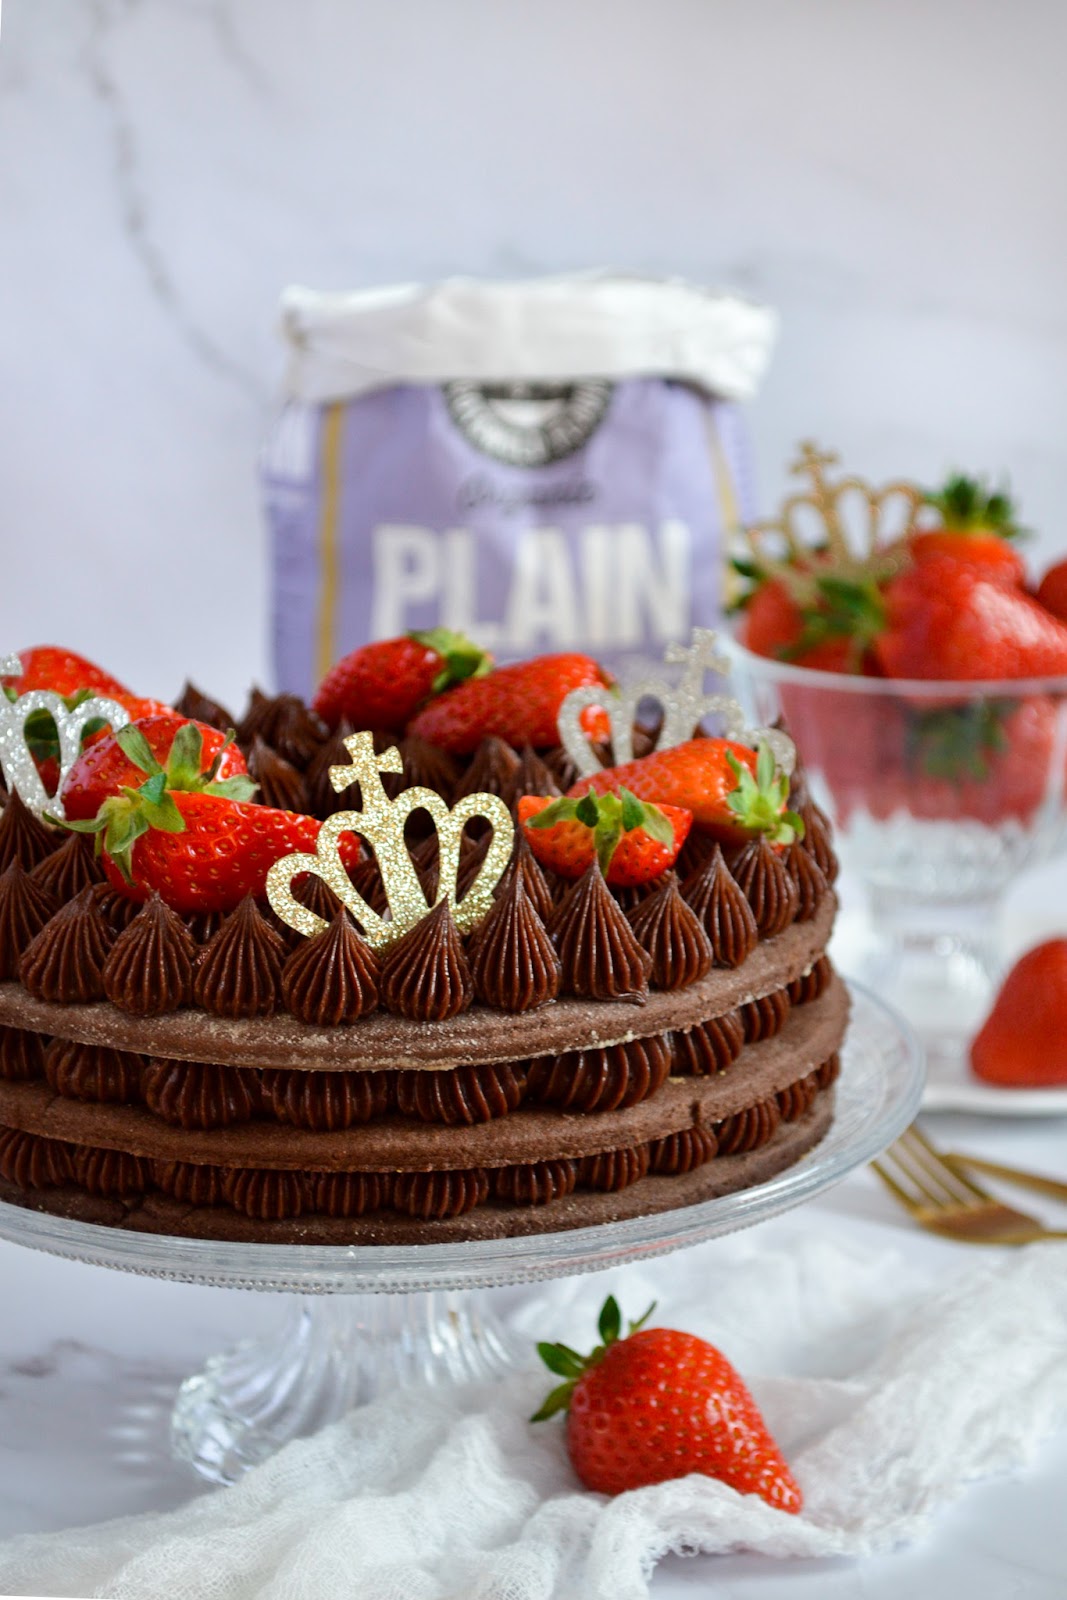 10 cream tart cake by BlueFoxConfections on DeviantArt